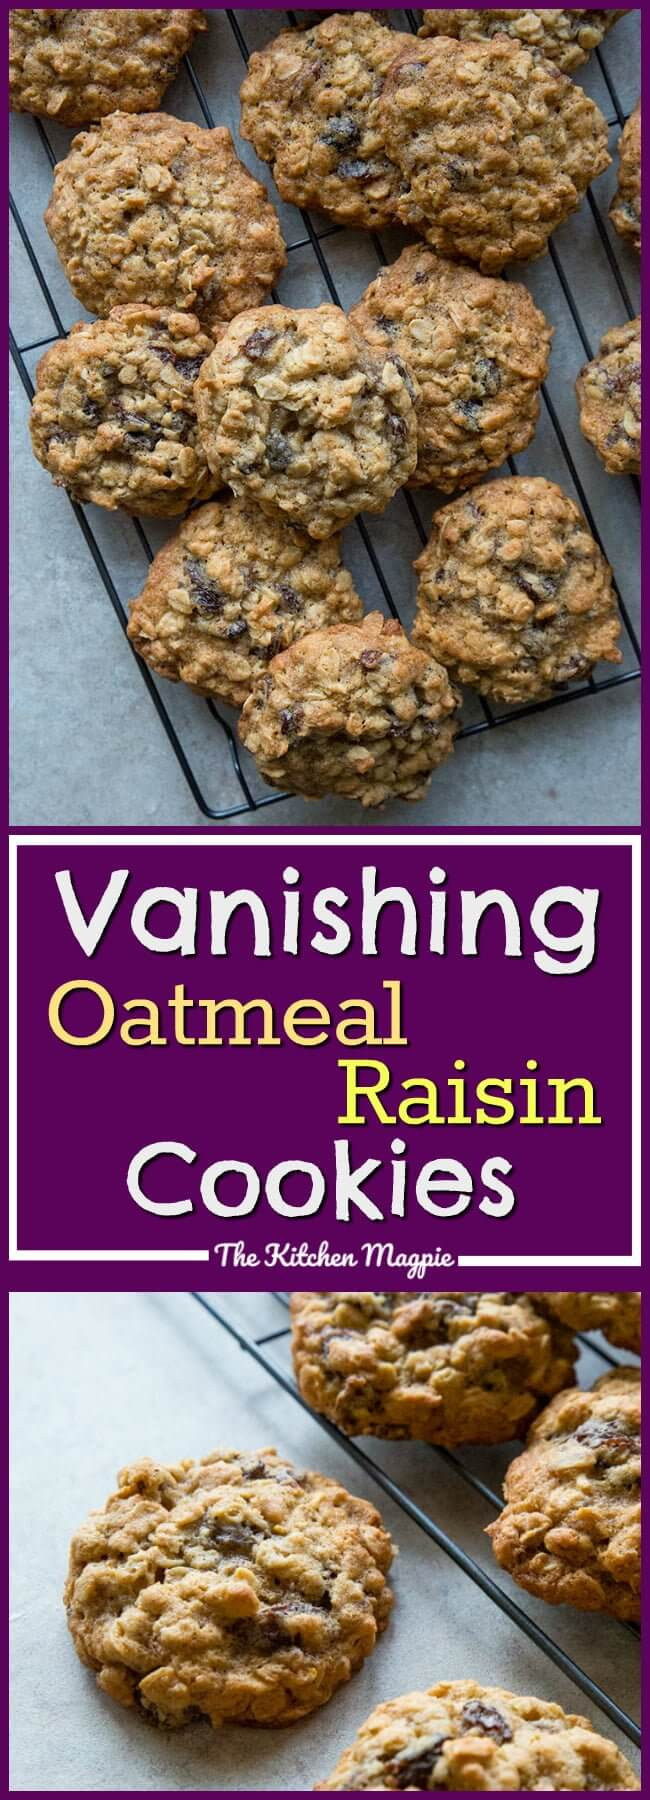 Quaker Vanishing Oatmeal Cookies
 Dad s Vanishing Oatmeal Raisin Cookies Right f the